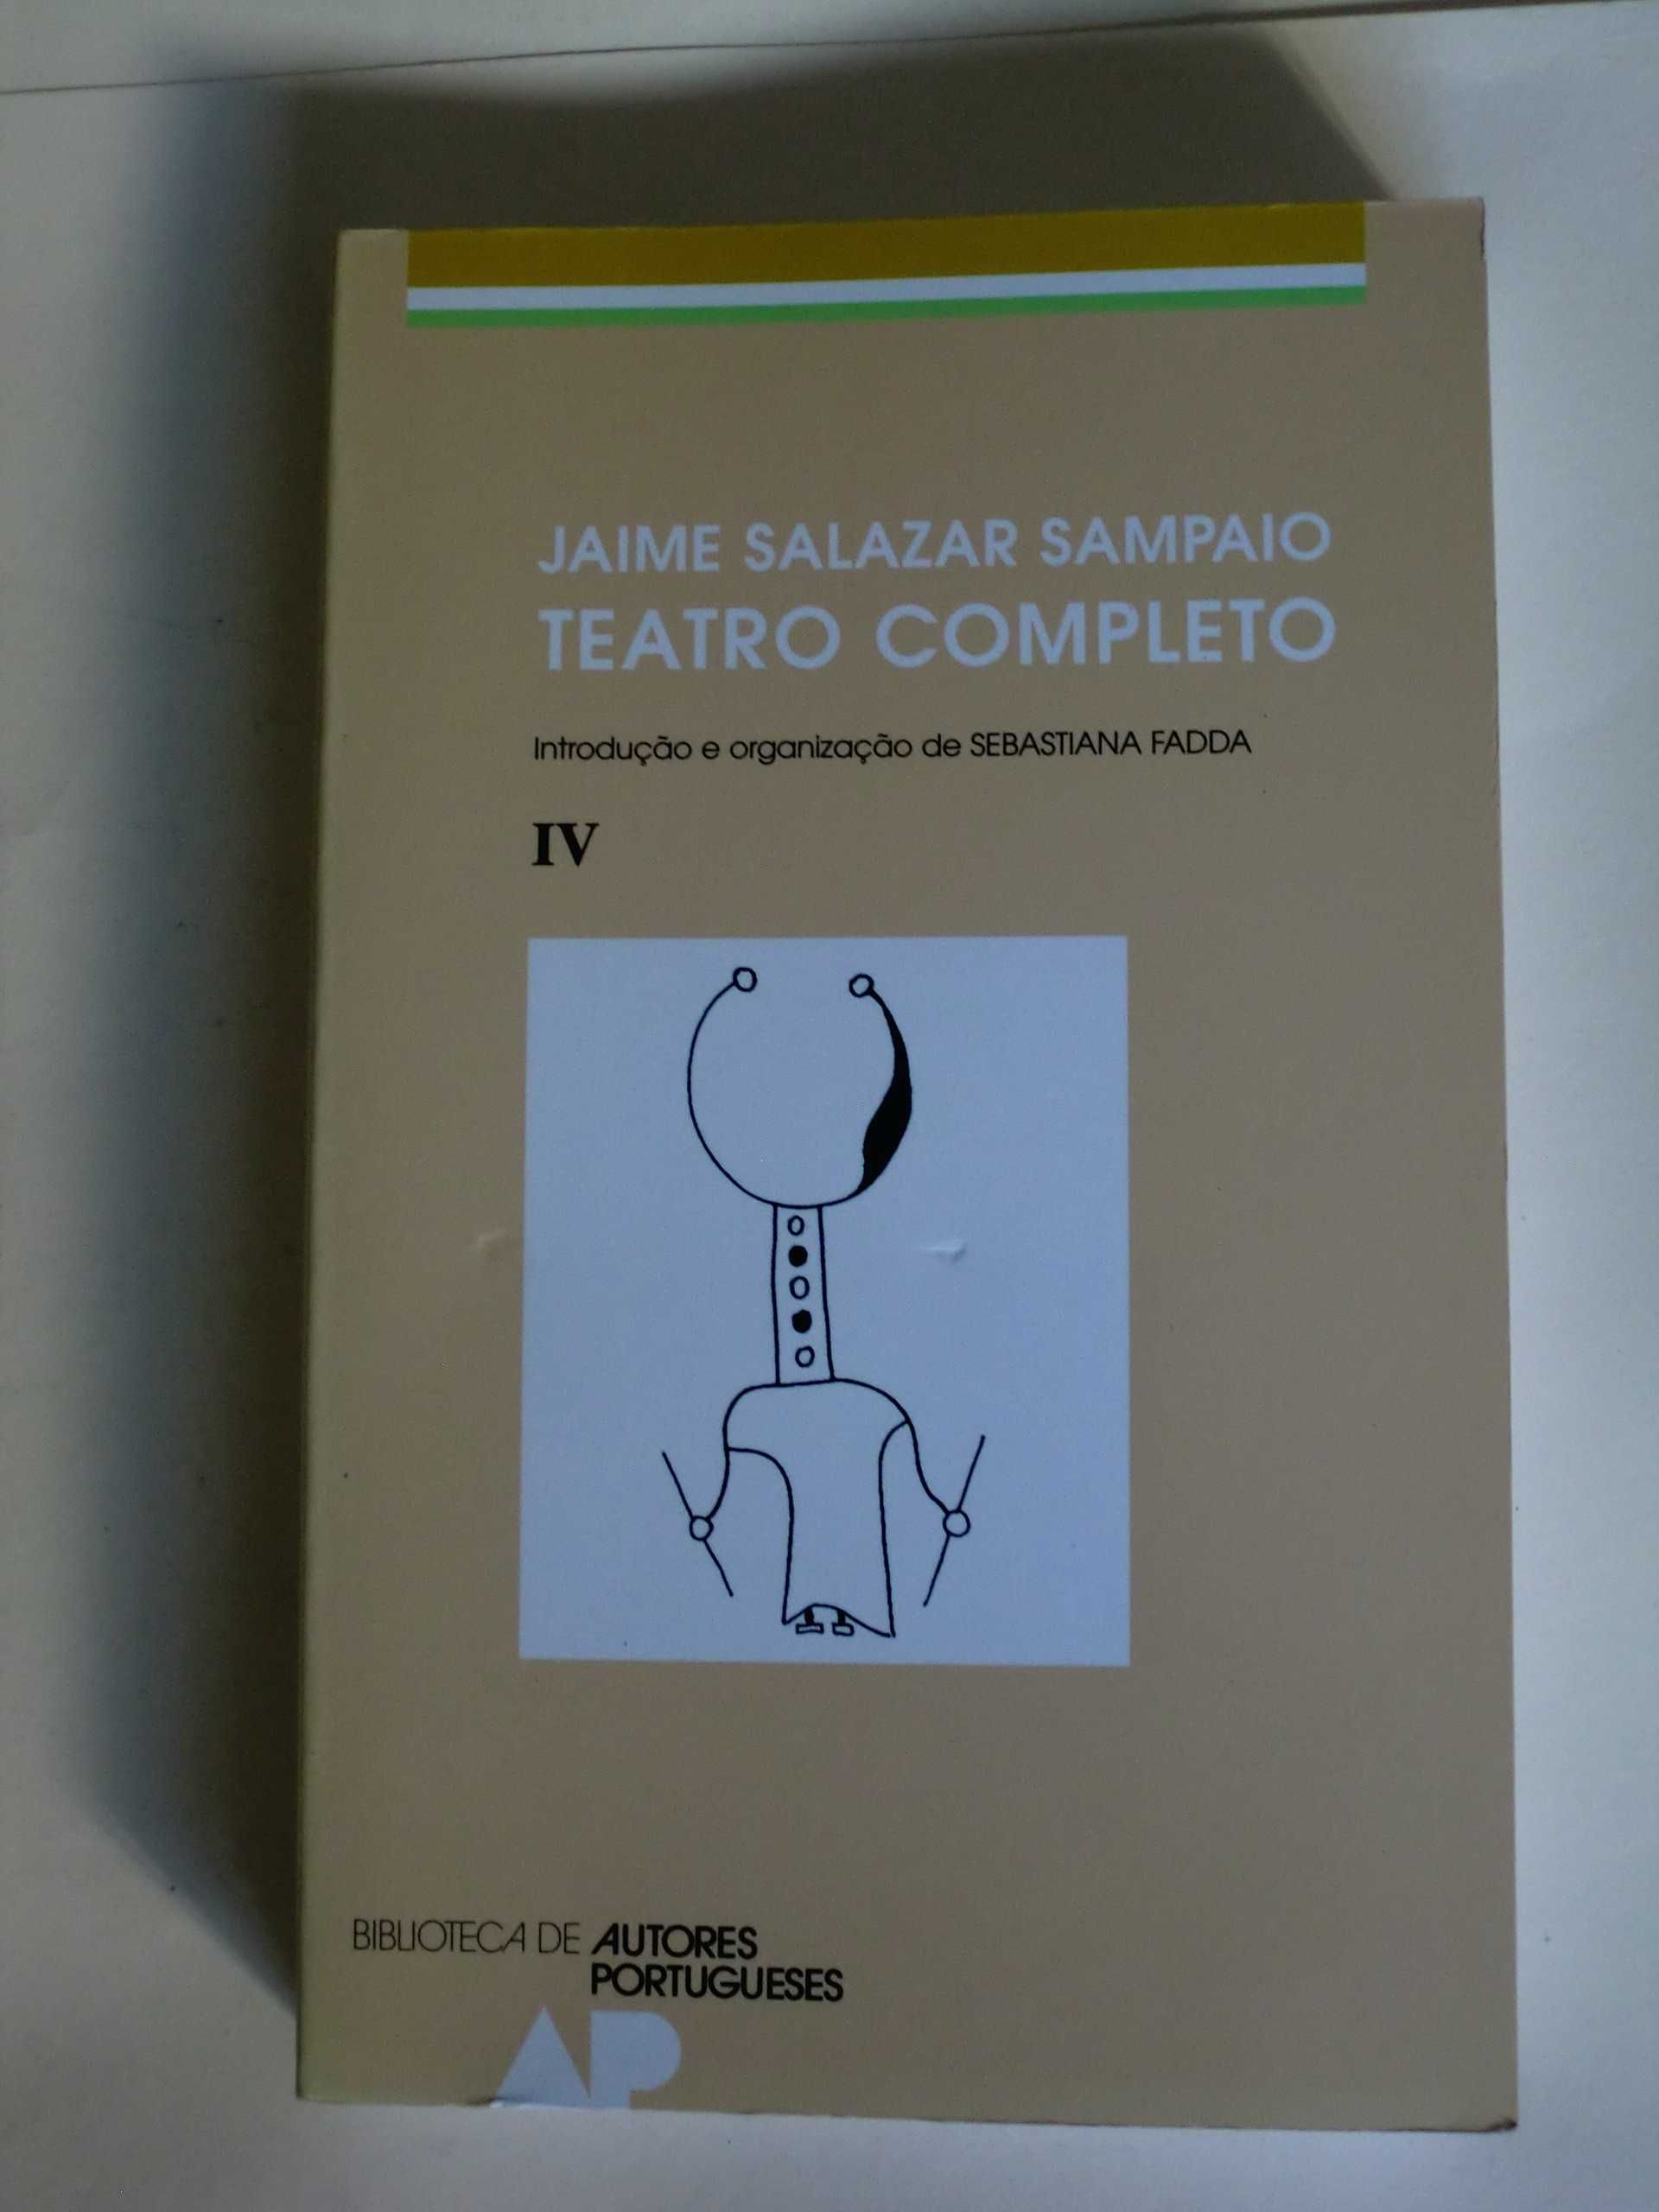 Jaime Salazar Sampaio - Teatro Completo
Volume IV